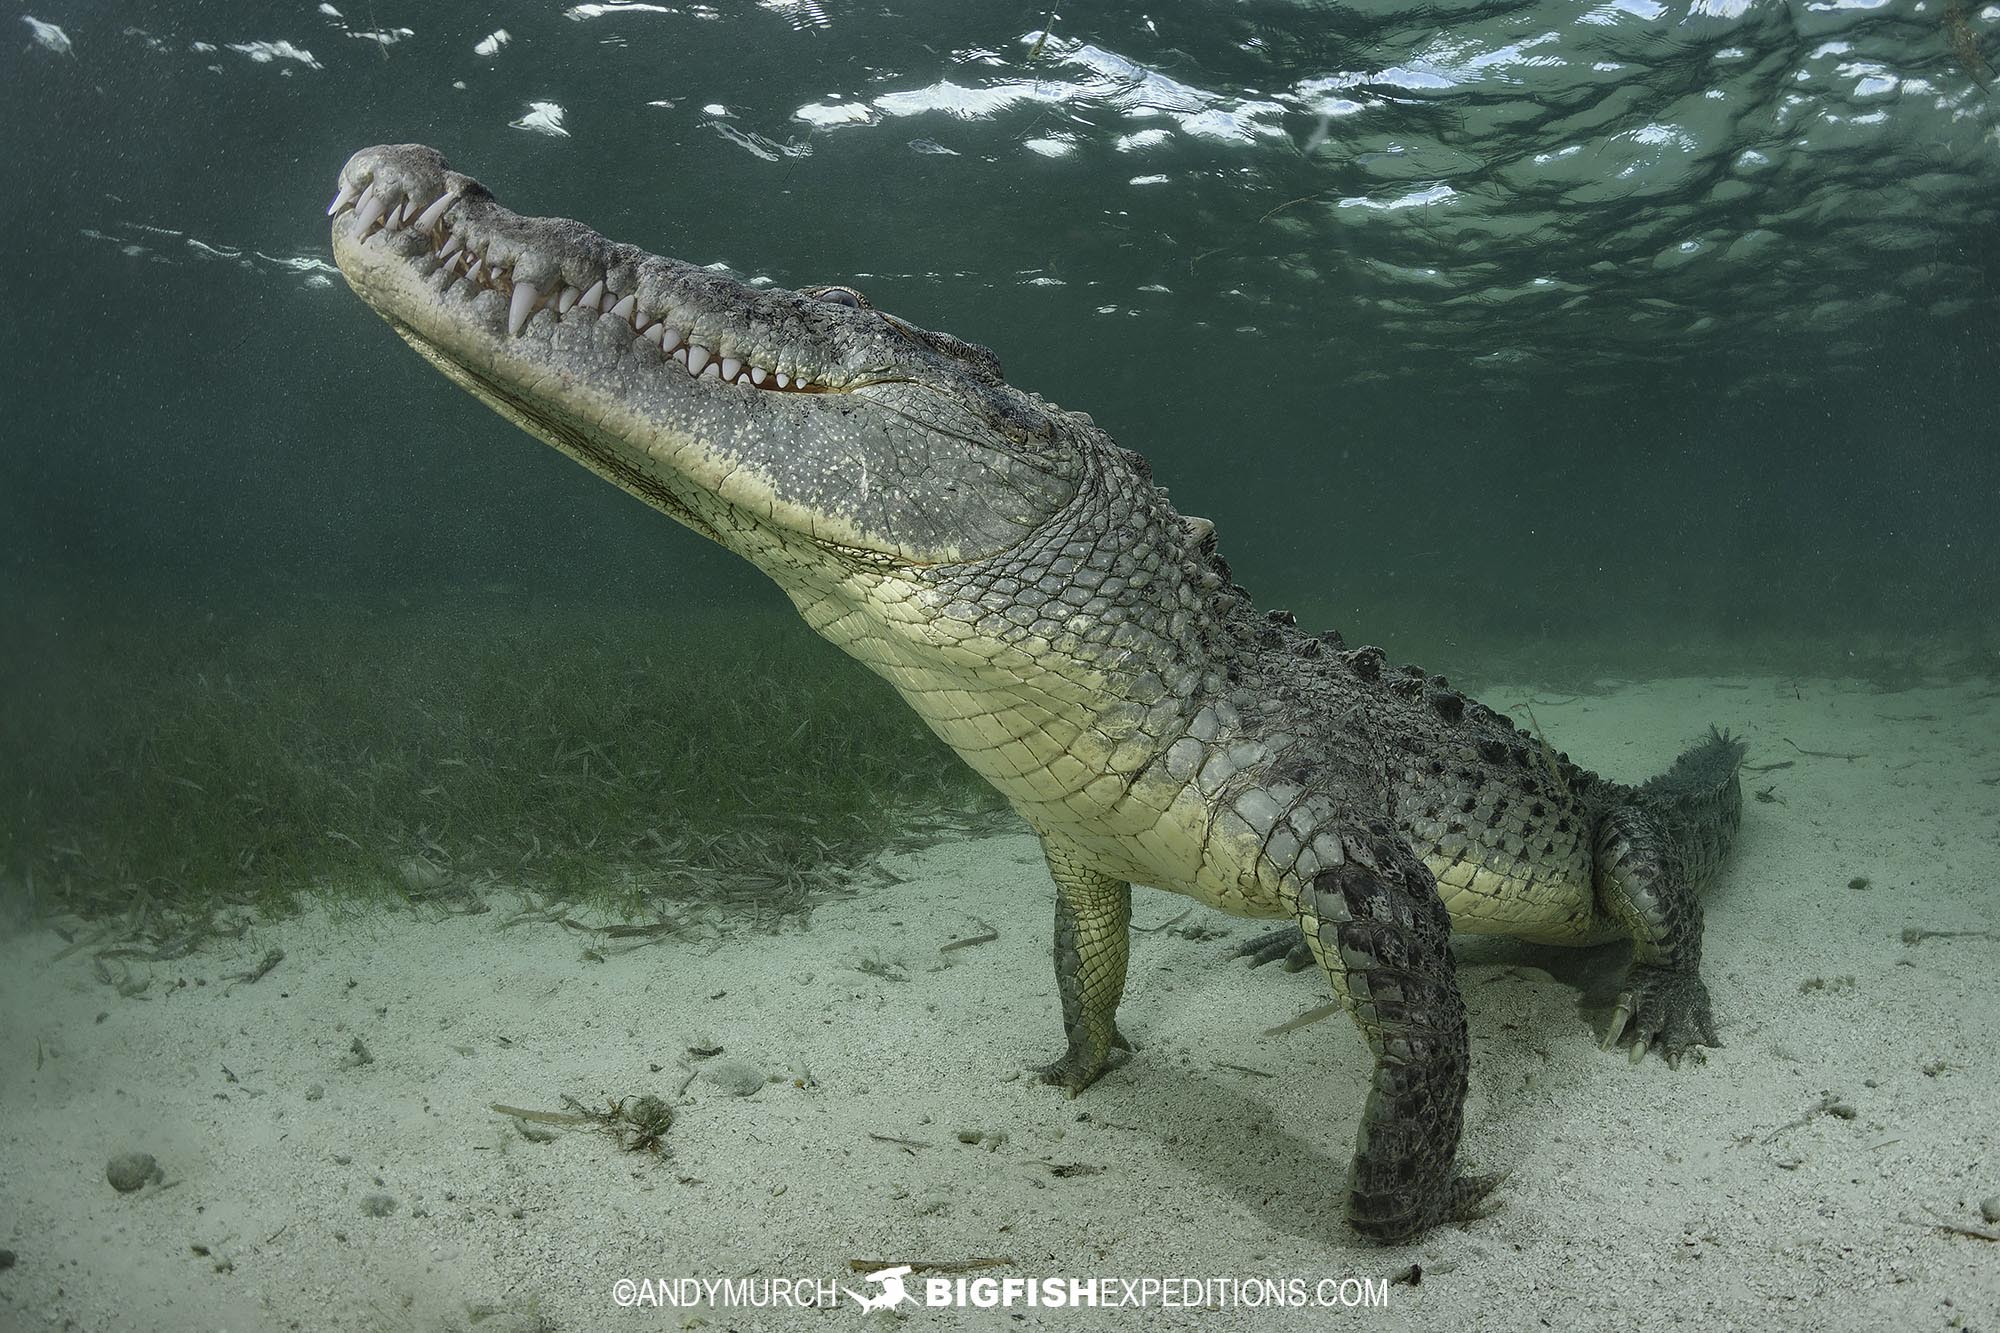 Snorkeling with crocodiles at Banco Chichorro in Mexico.